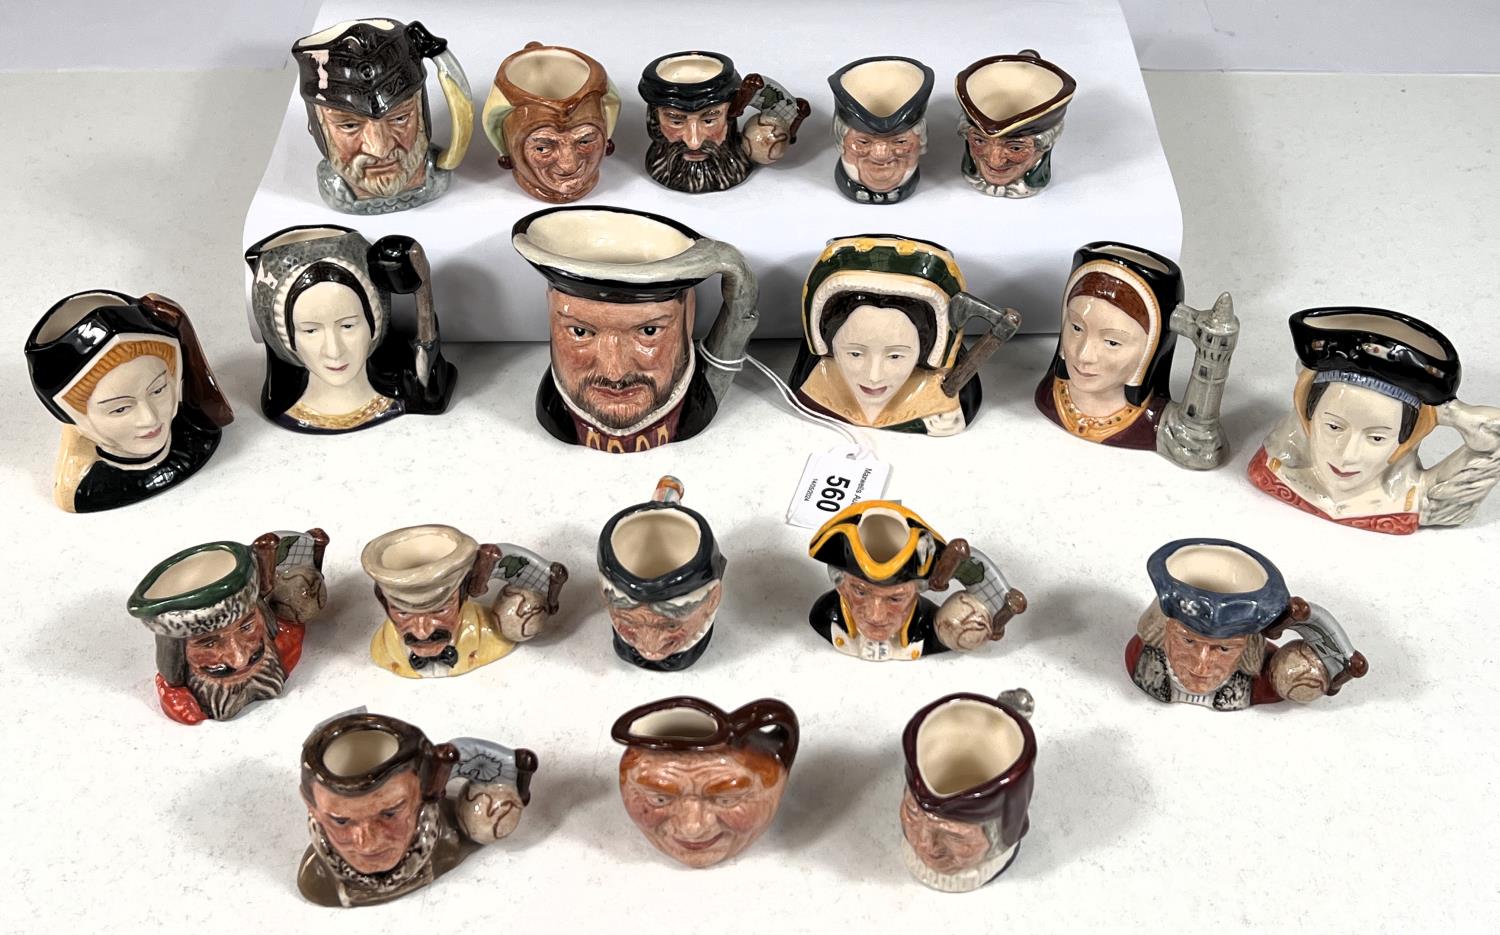 7 small Royal Doulton character jugs: Henry VIII and his 6 wives: 12 tiny Royal Doulton character